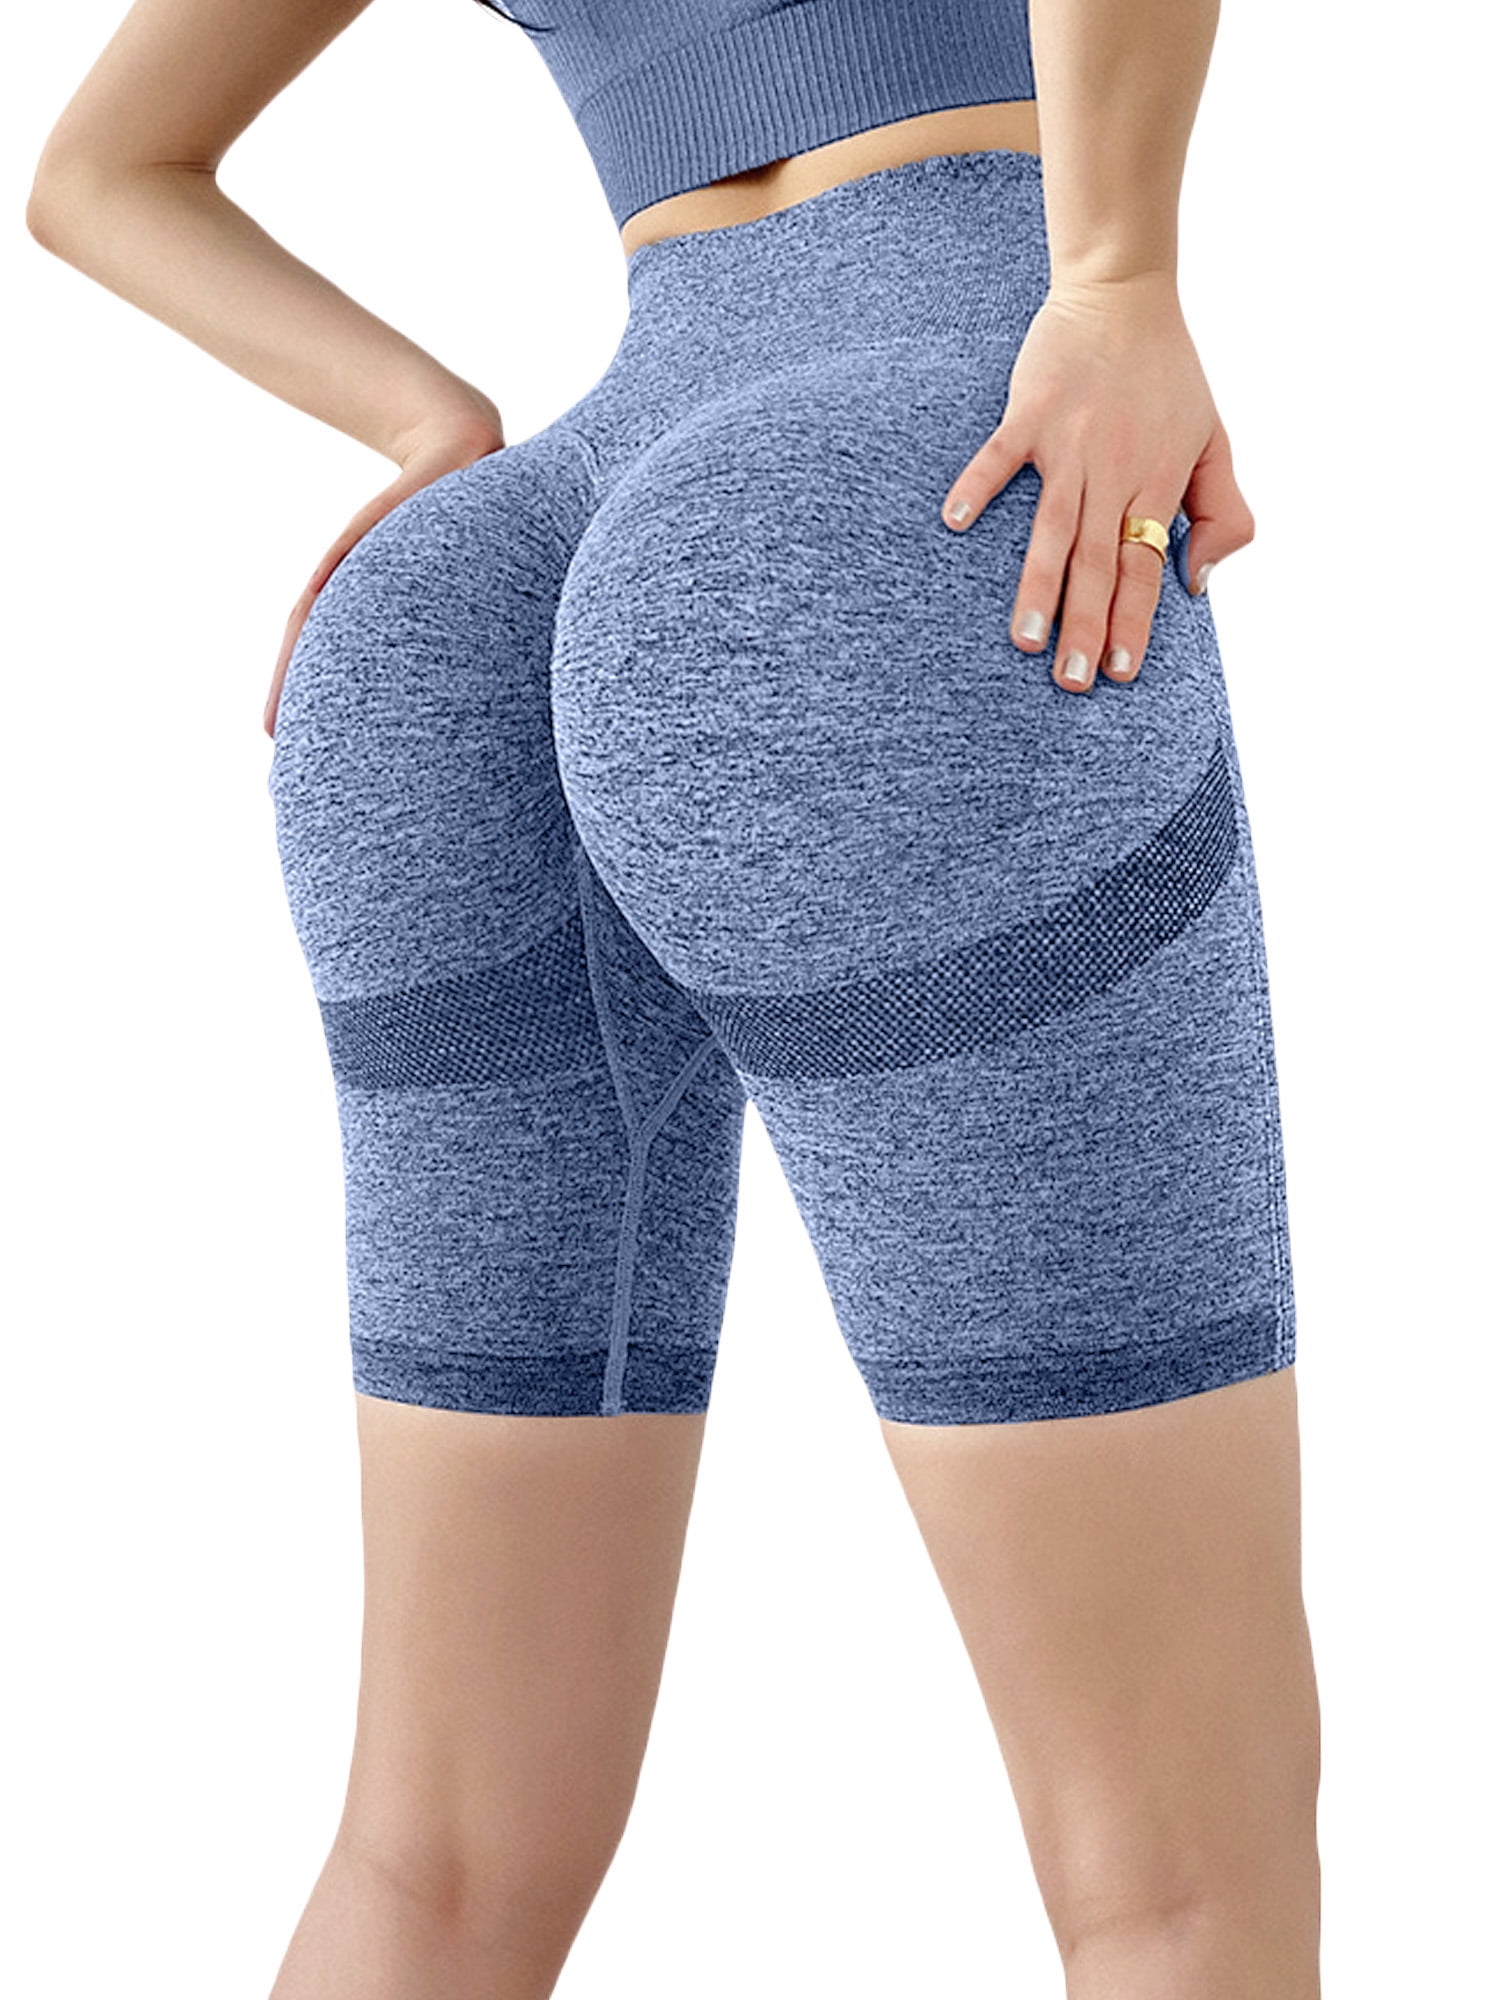 Buy Bodybay Women Seamless Yoga Leggings Ruched Push Up Workout